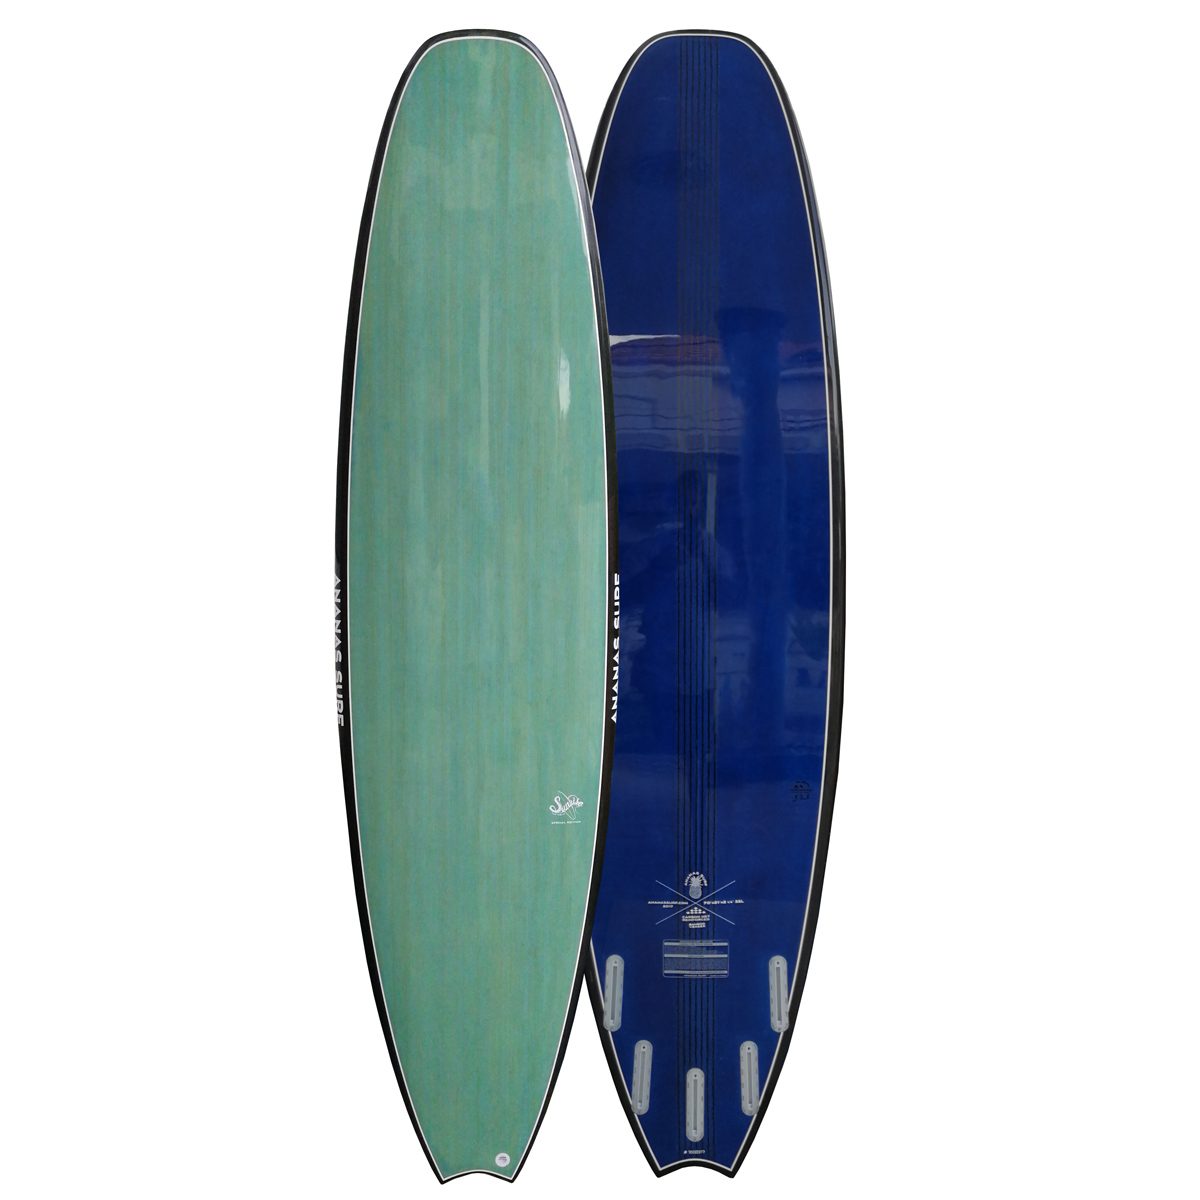 Anananas Surf Yatagan surfboard 7'0" Sunrise collection